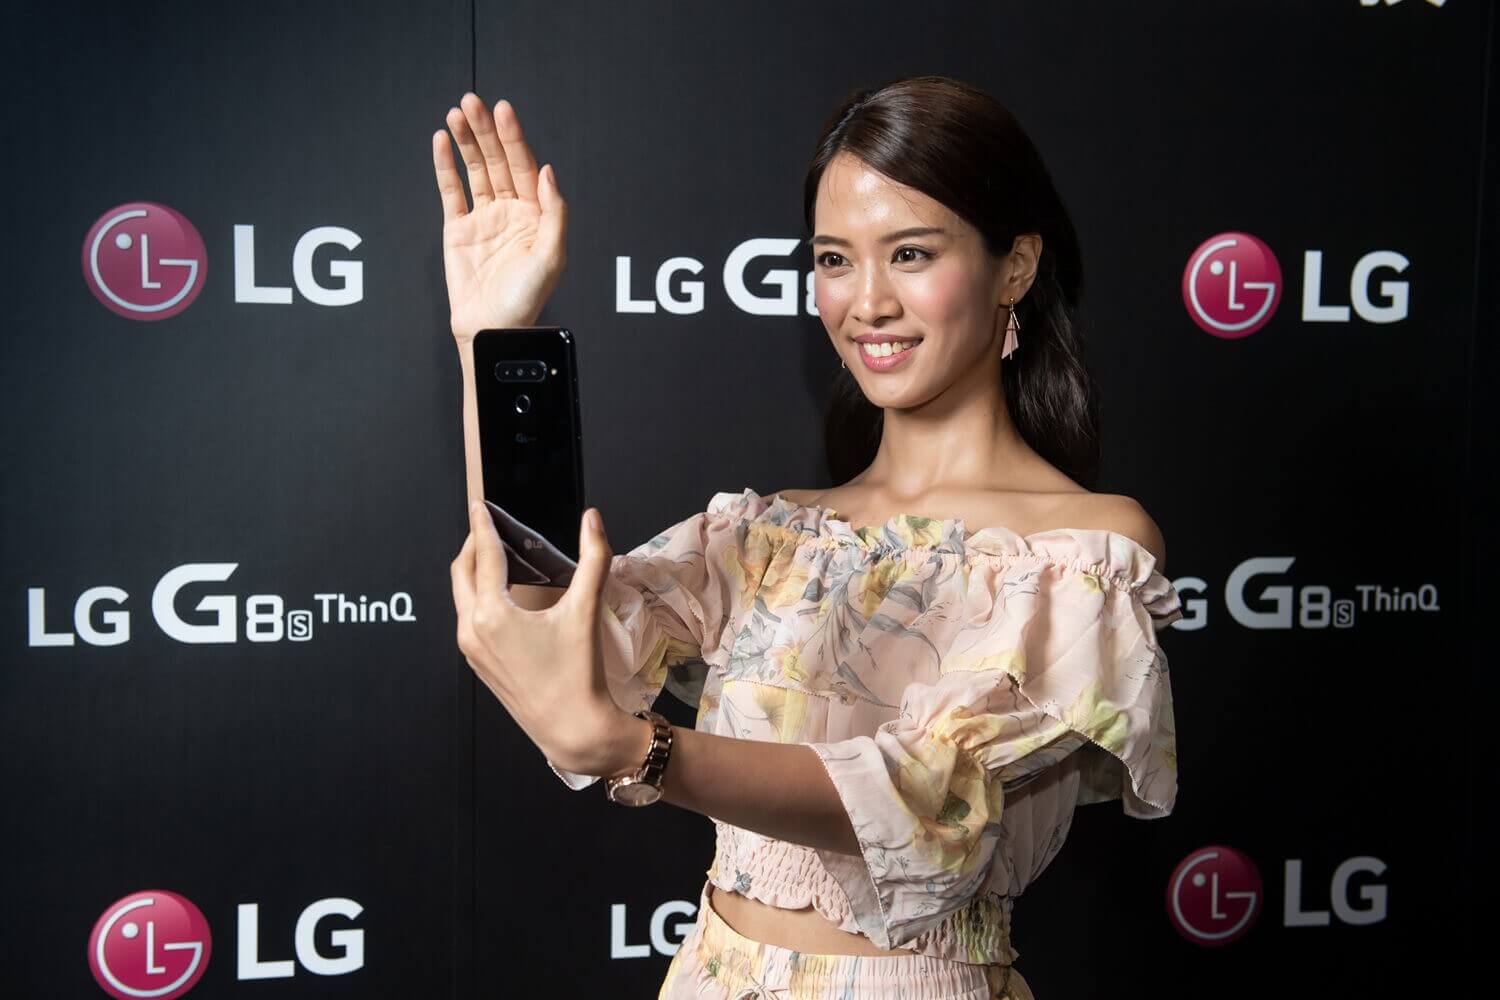 LG G8S ThinQ 正式在台上市 主打 ToF Z 達成 AirMotion 隔空手勢操作、hand ID 靜脈辨識 同場加映 G8 ThinQ G8S ThinQ 差異比較表09